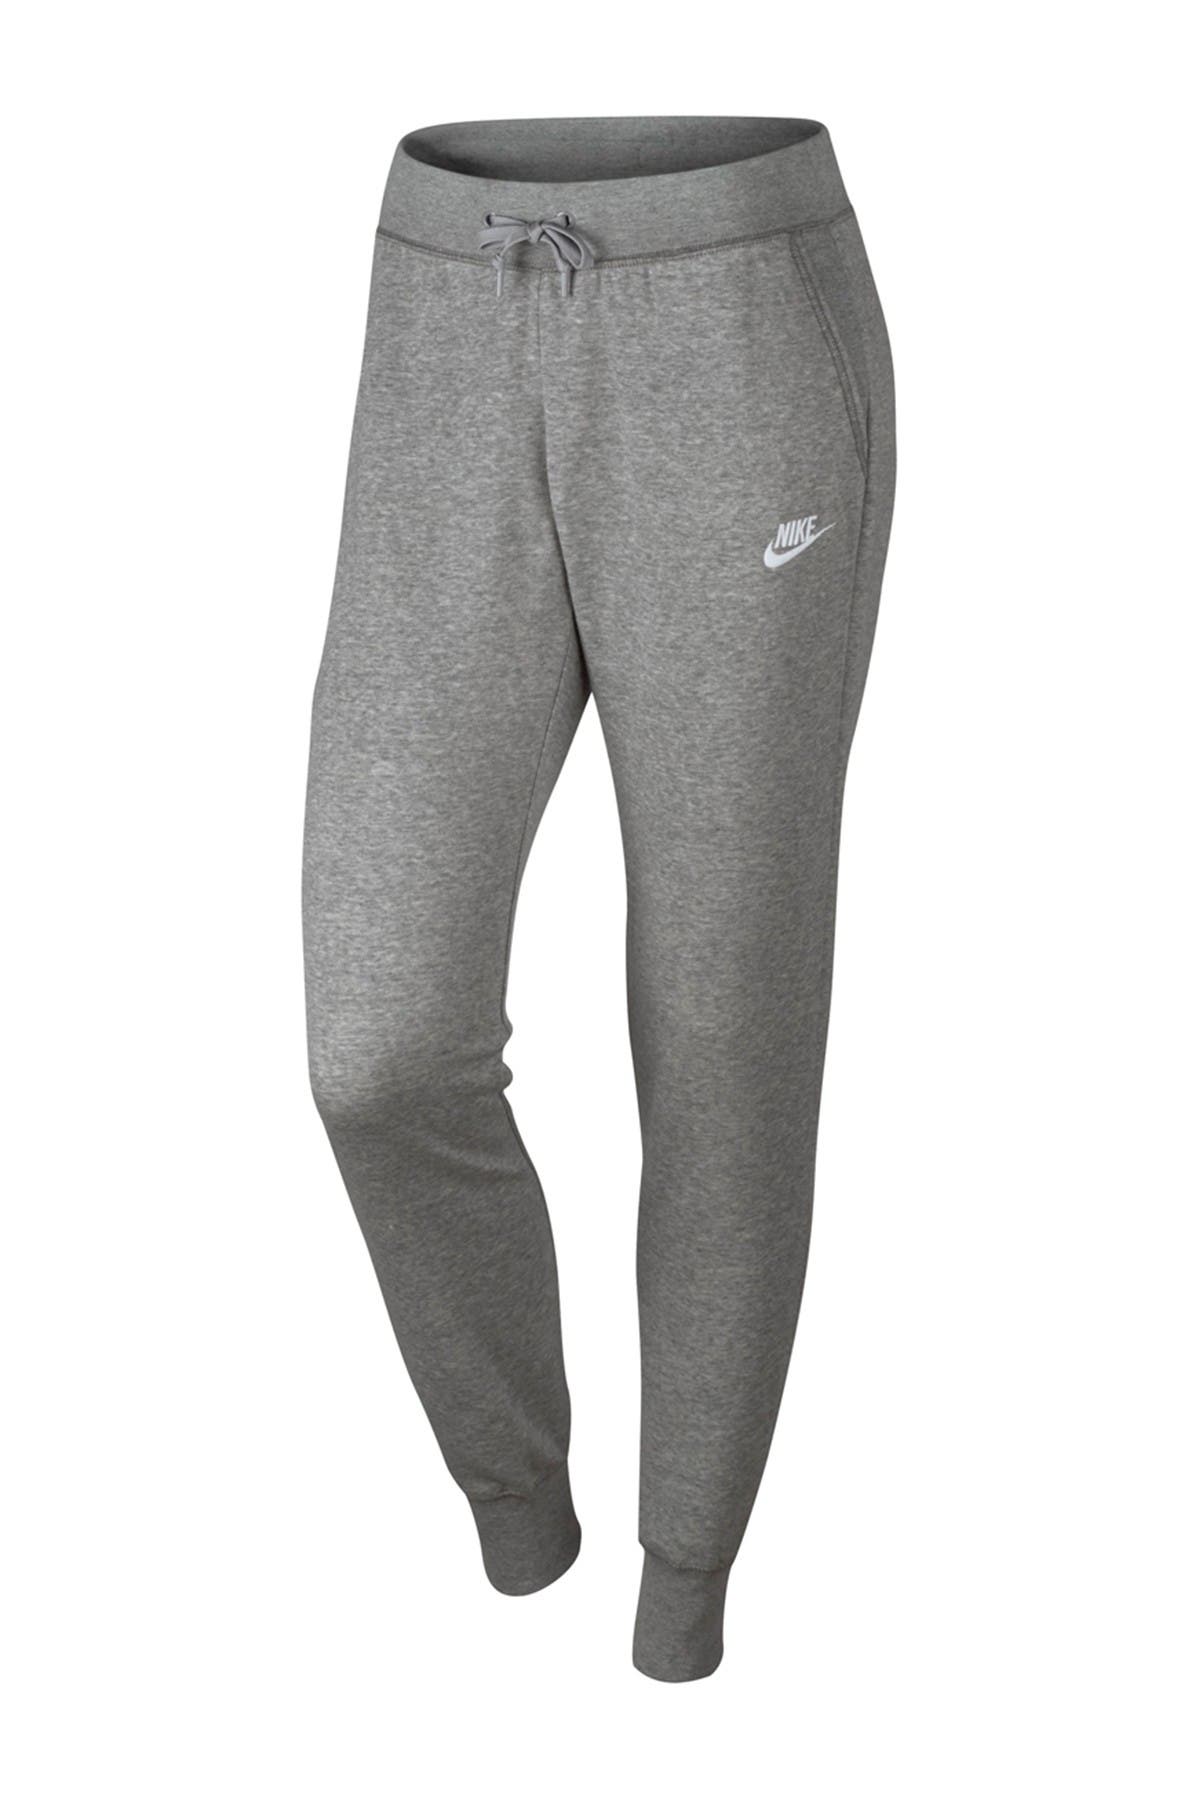 nike skinny joggers womens grey